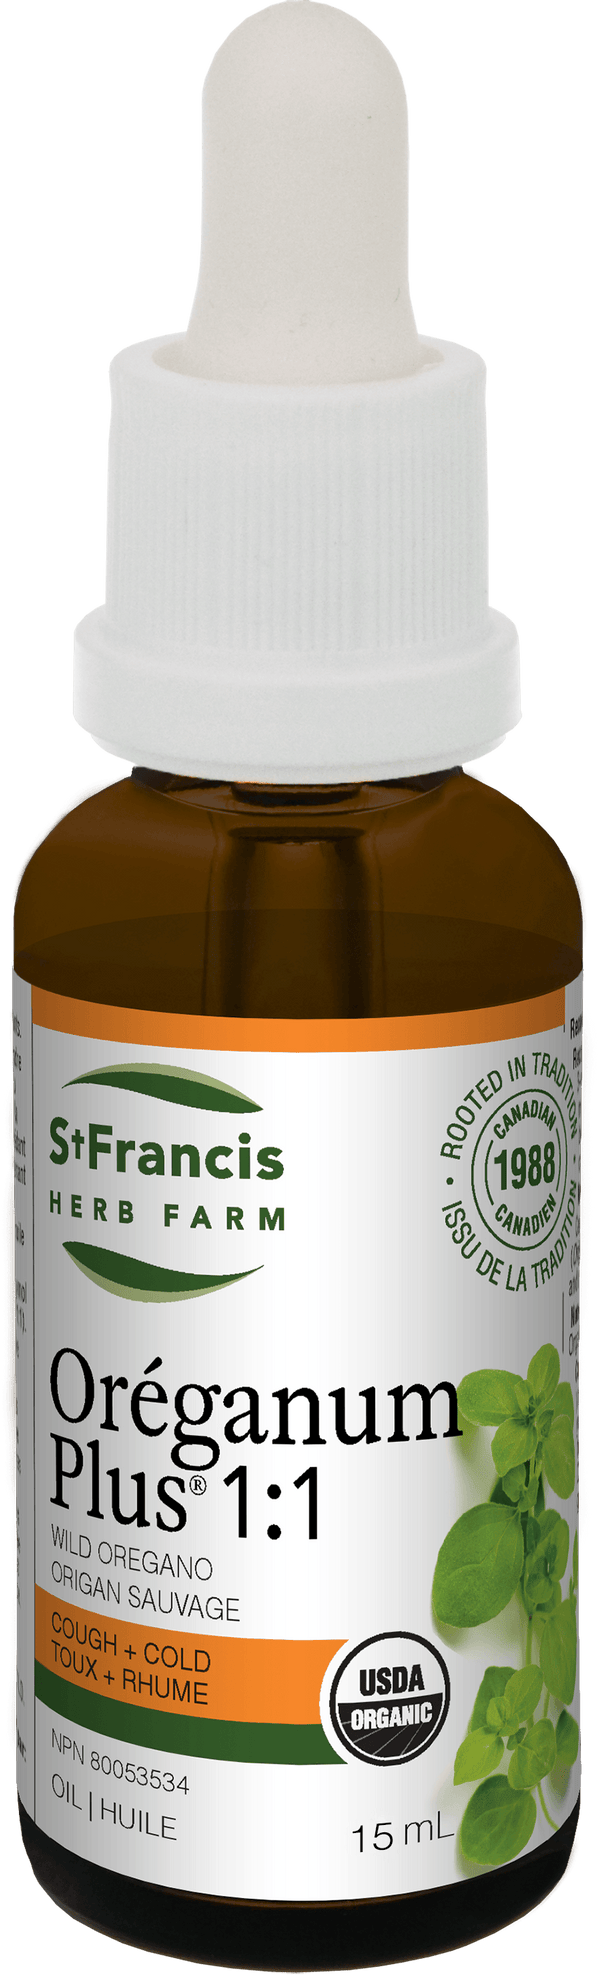 St Francis Herb Farm Oreganum Plus 1:1